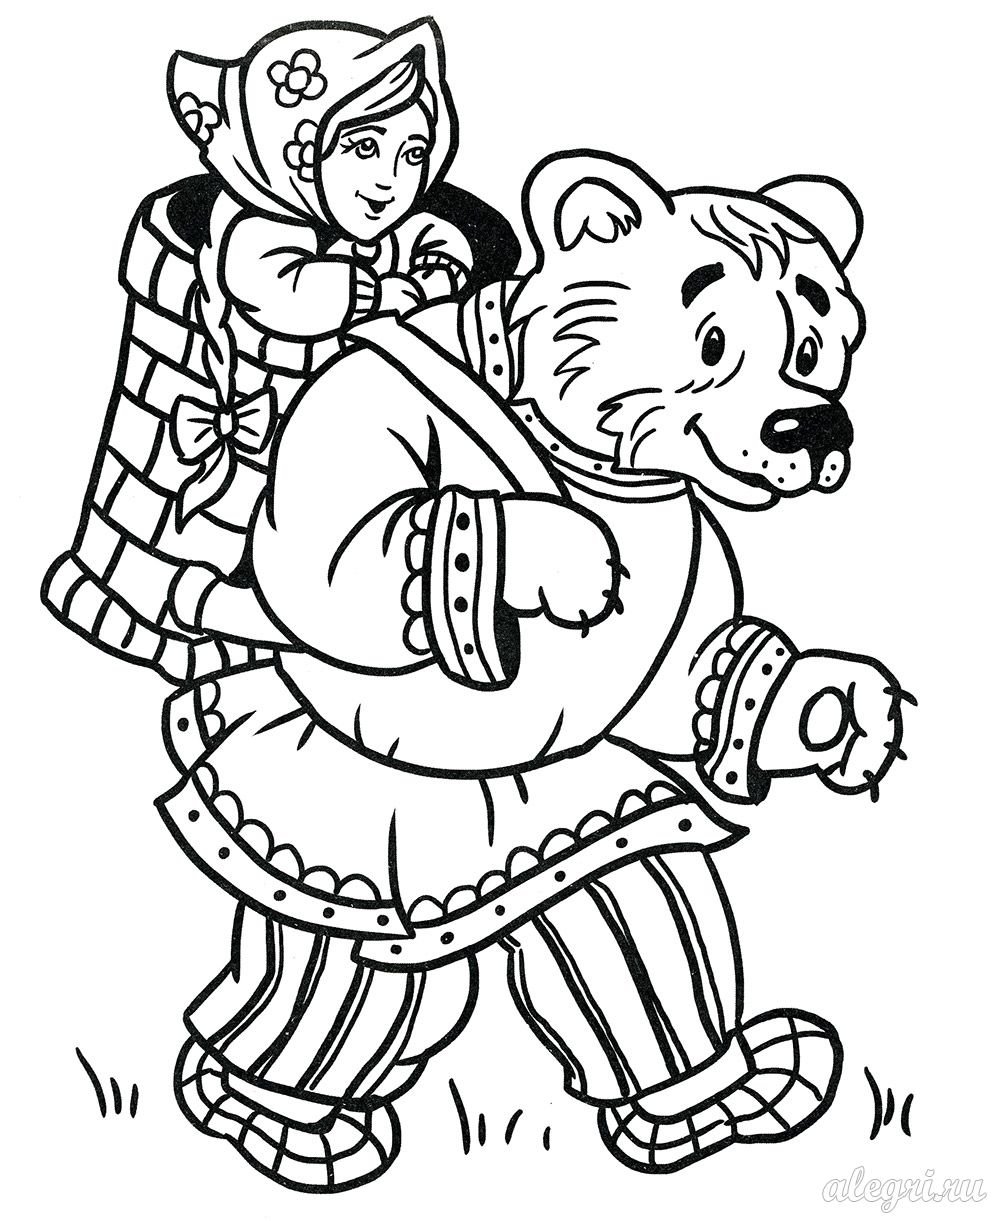 Сказка Маша и медведь раскраска